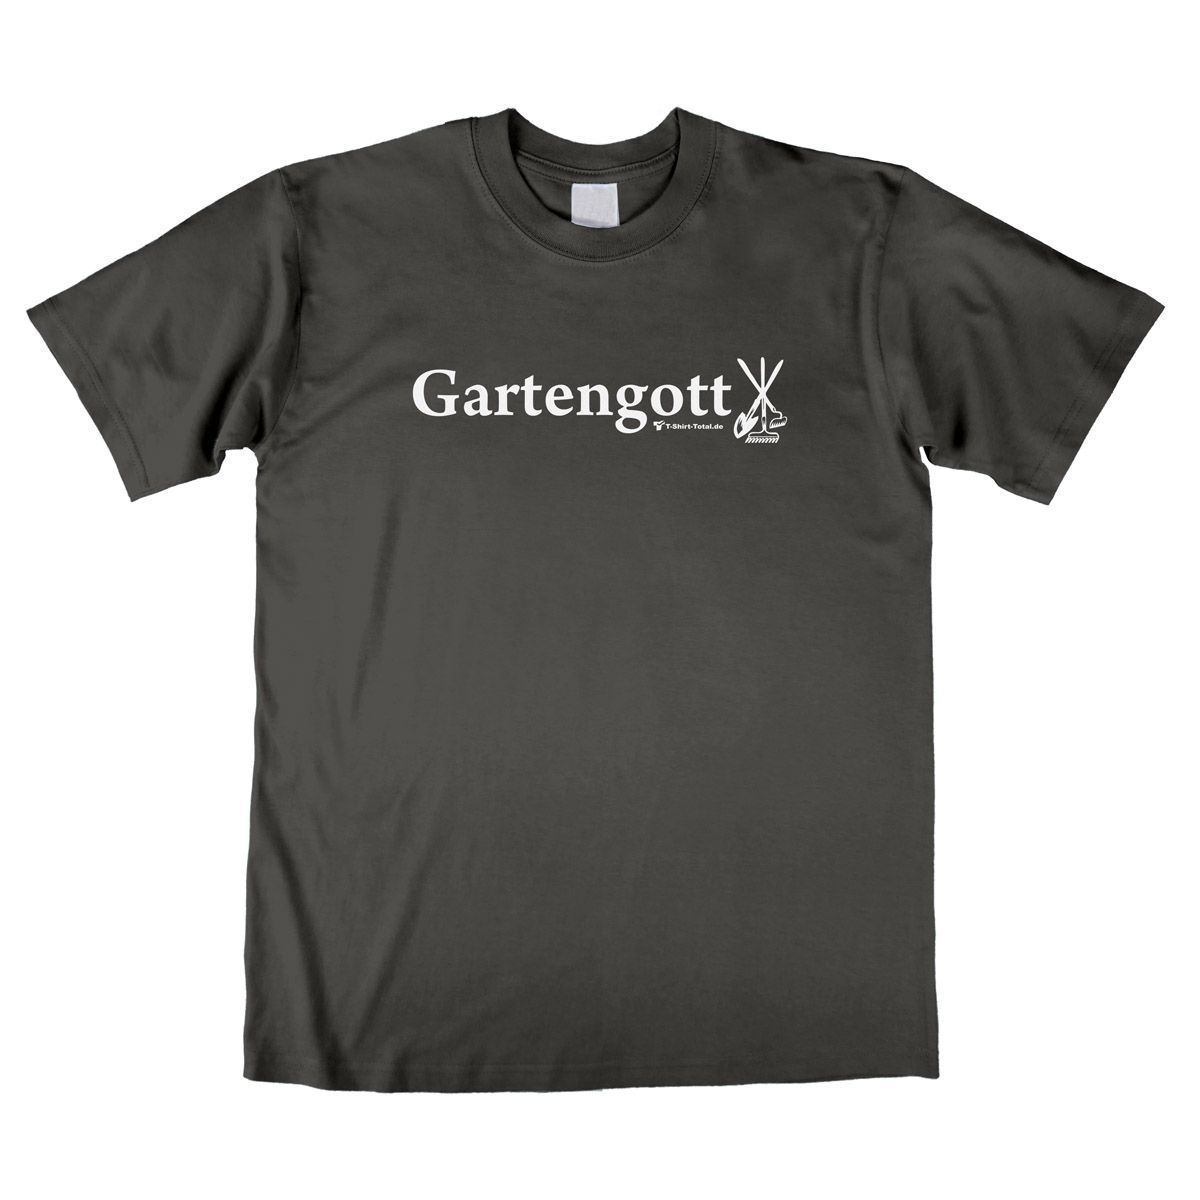 Gartengott Unisex T-Shirt grau Extra Large